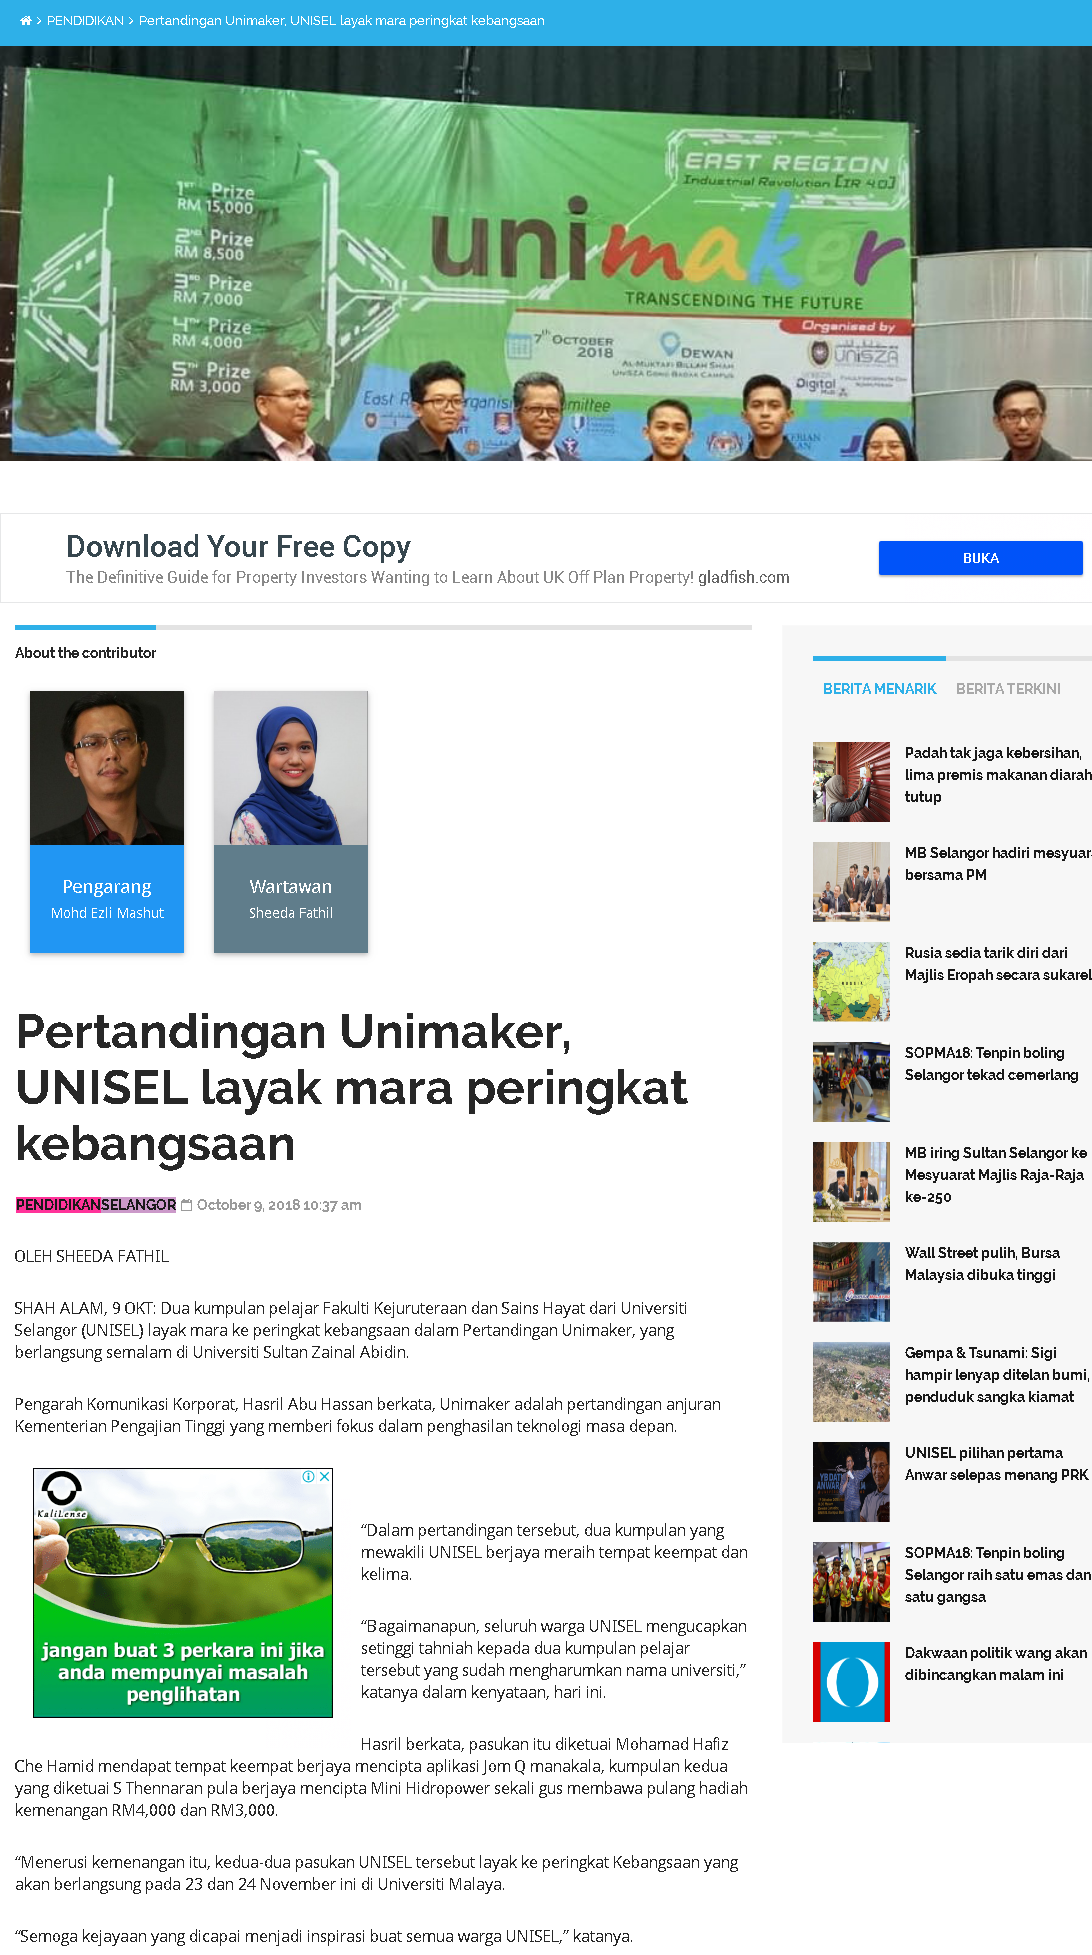 Selangor Kini Online - 9 Oktober 2018